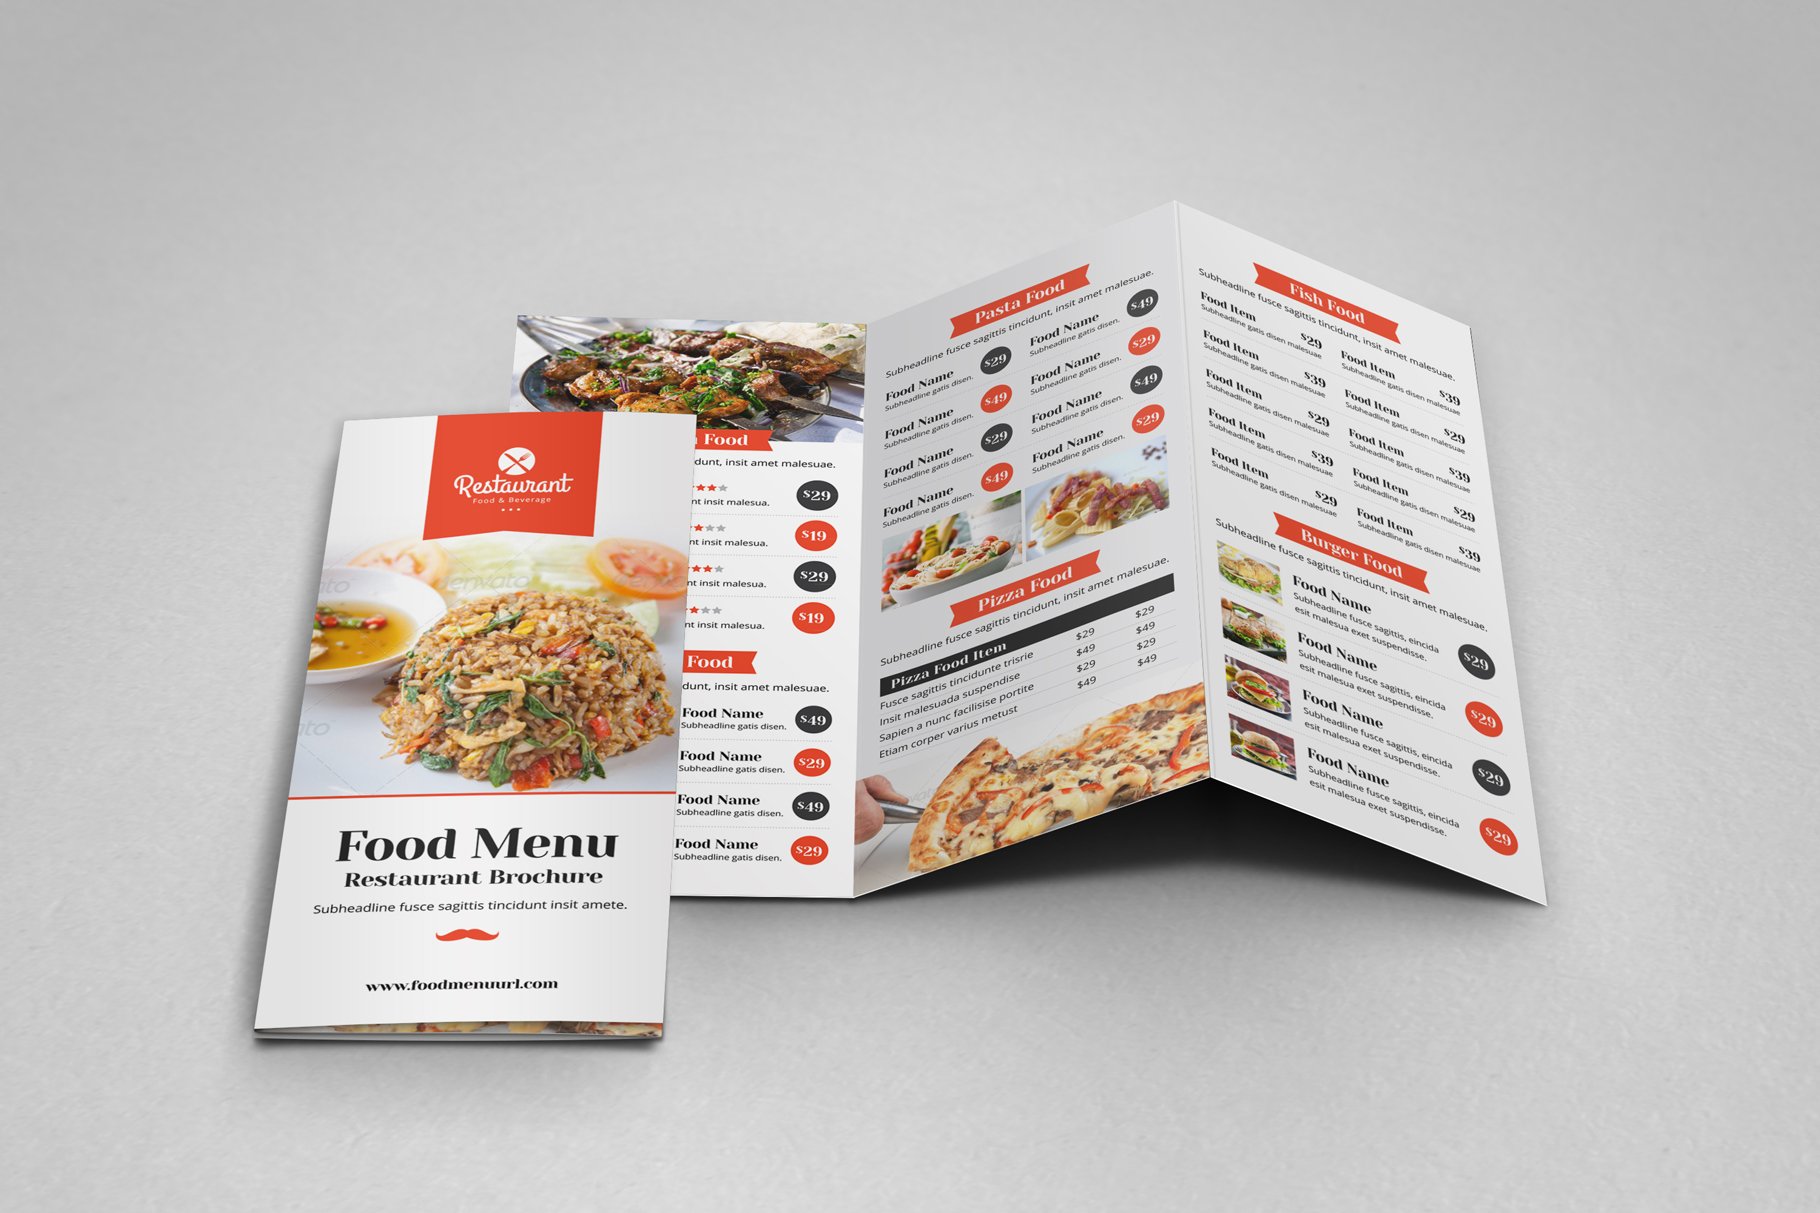 Food Menu Trifold Brochure v1 preview image.